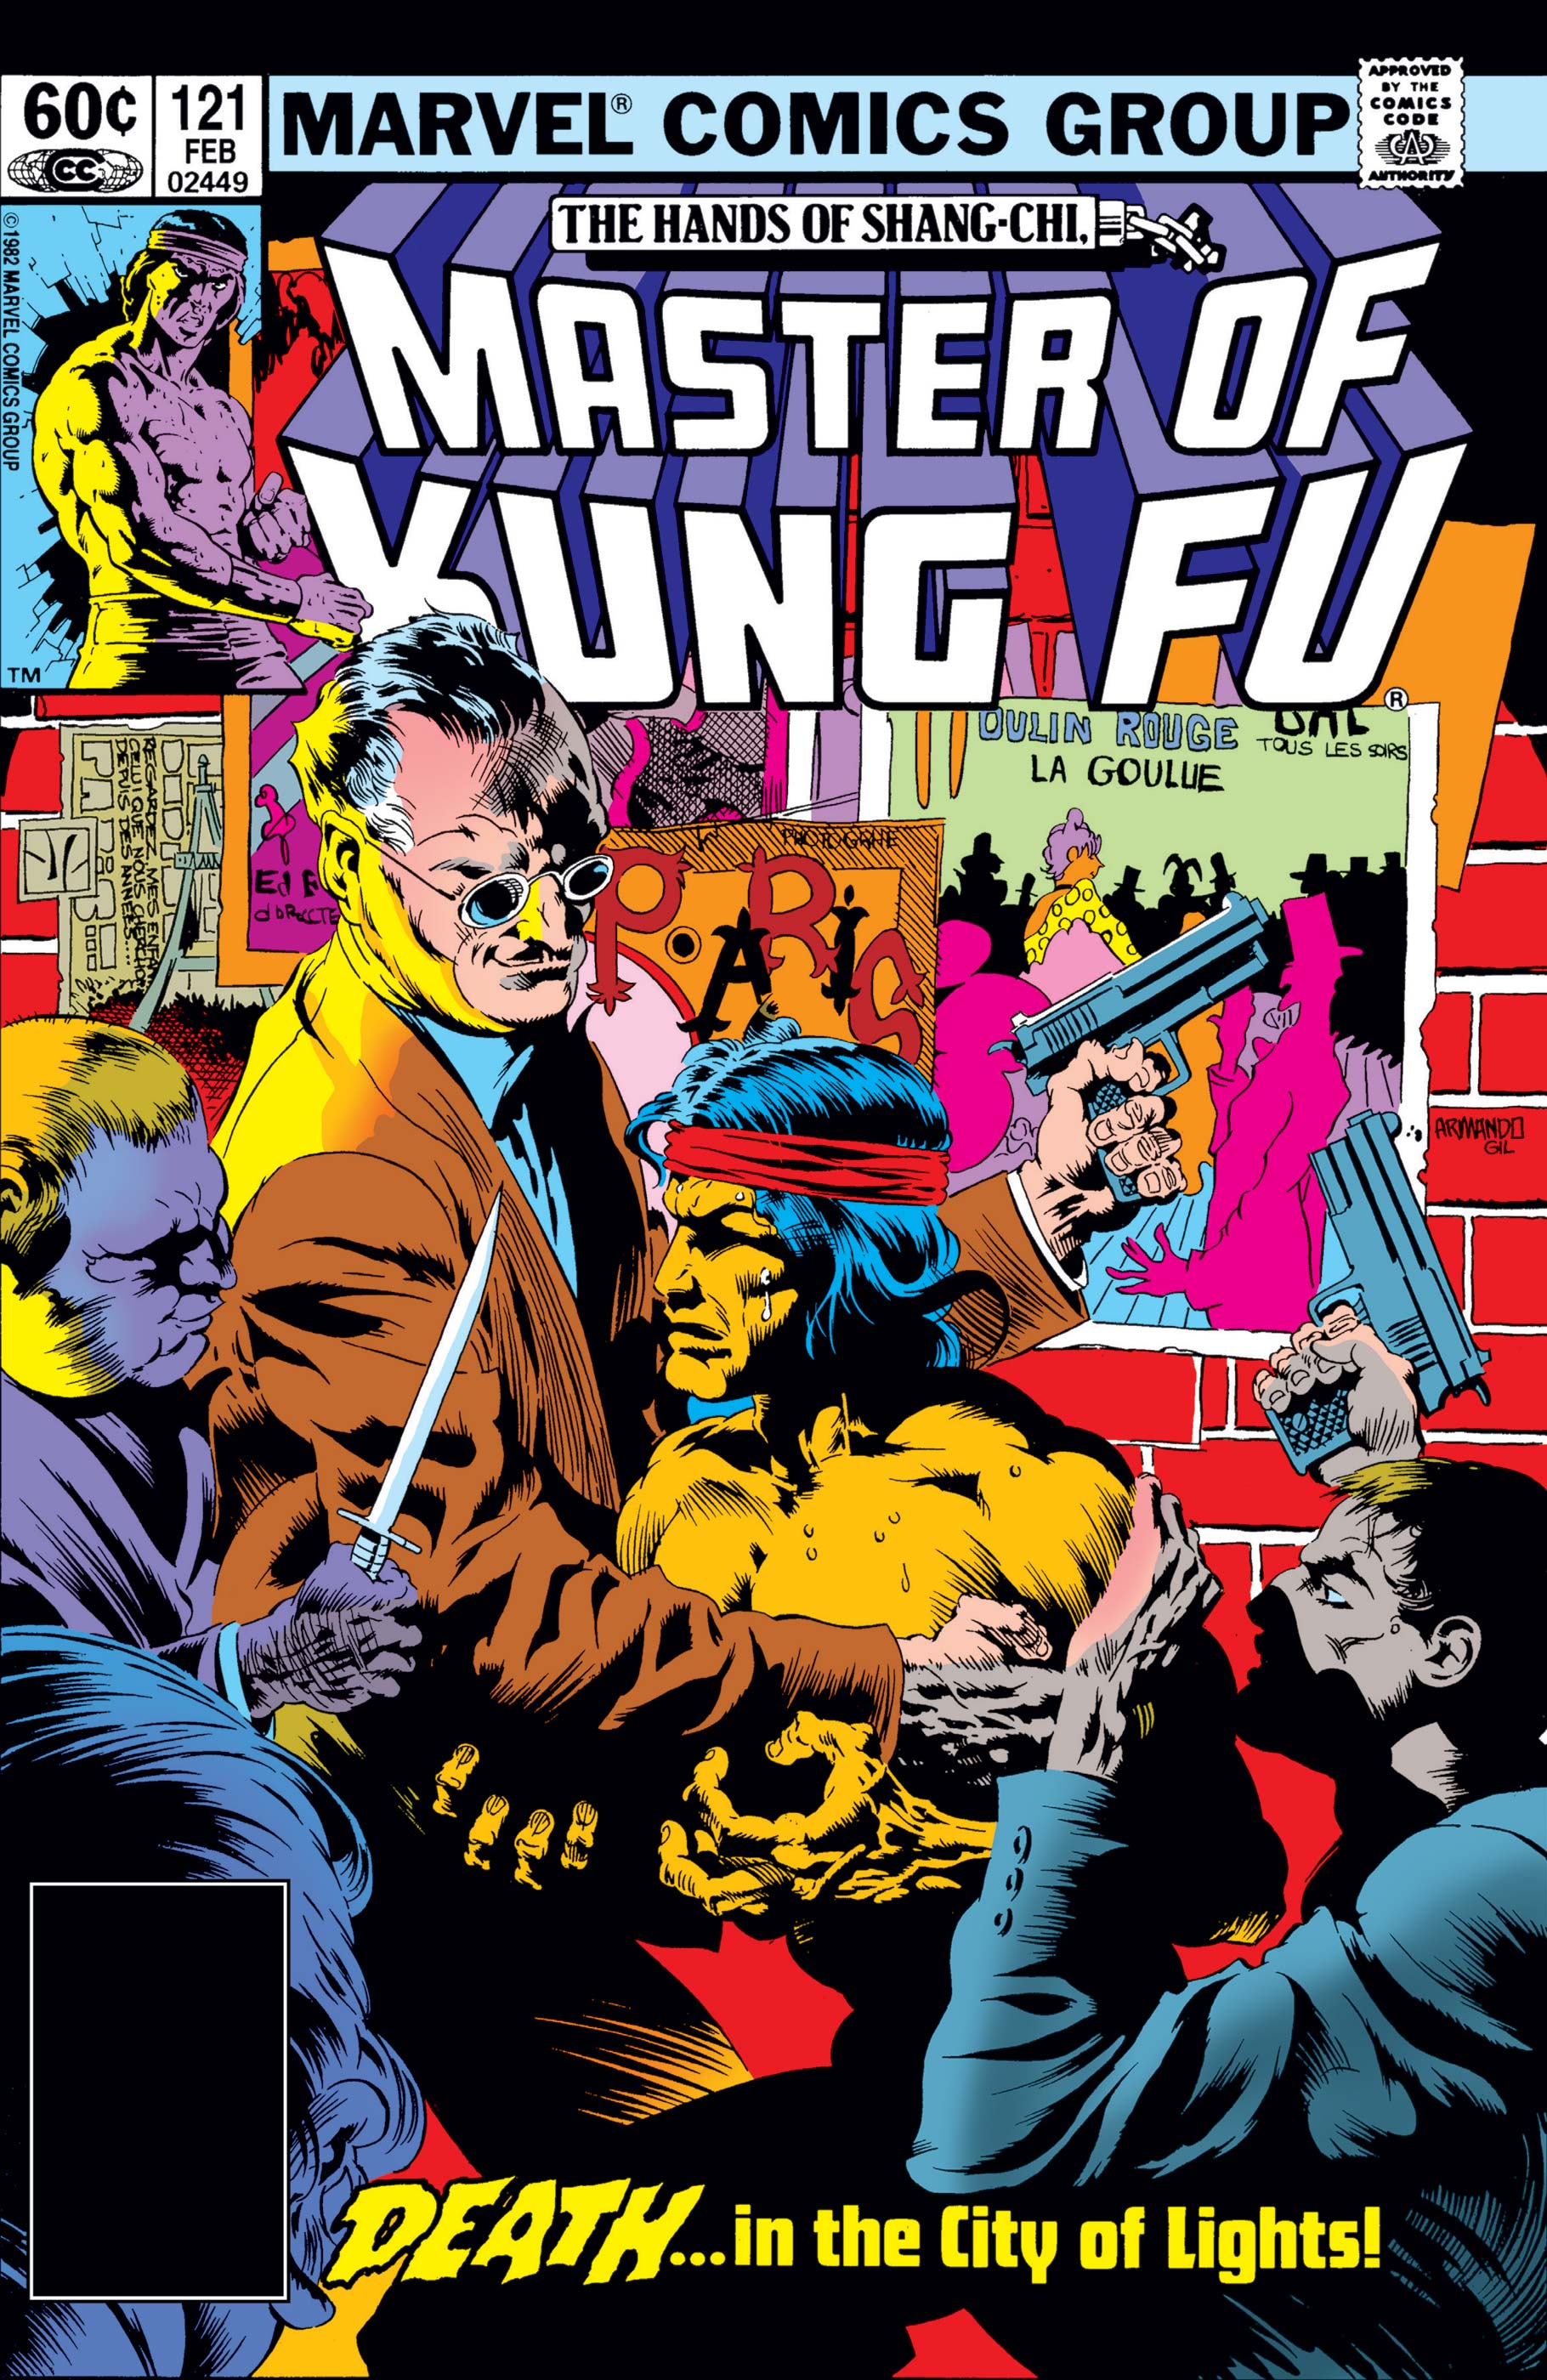 Master of Kung Fu (1974) #121